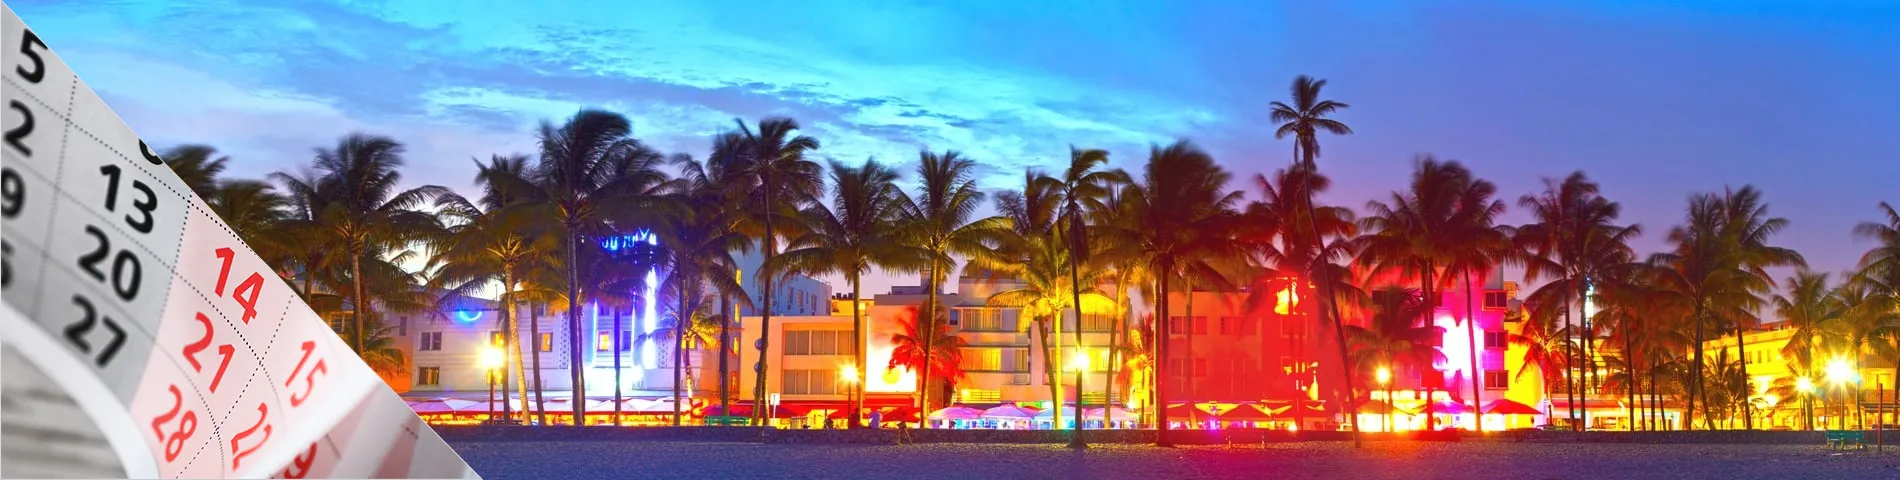 Miami - Weekend kurs